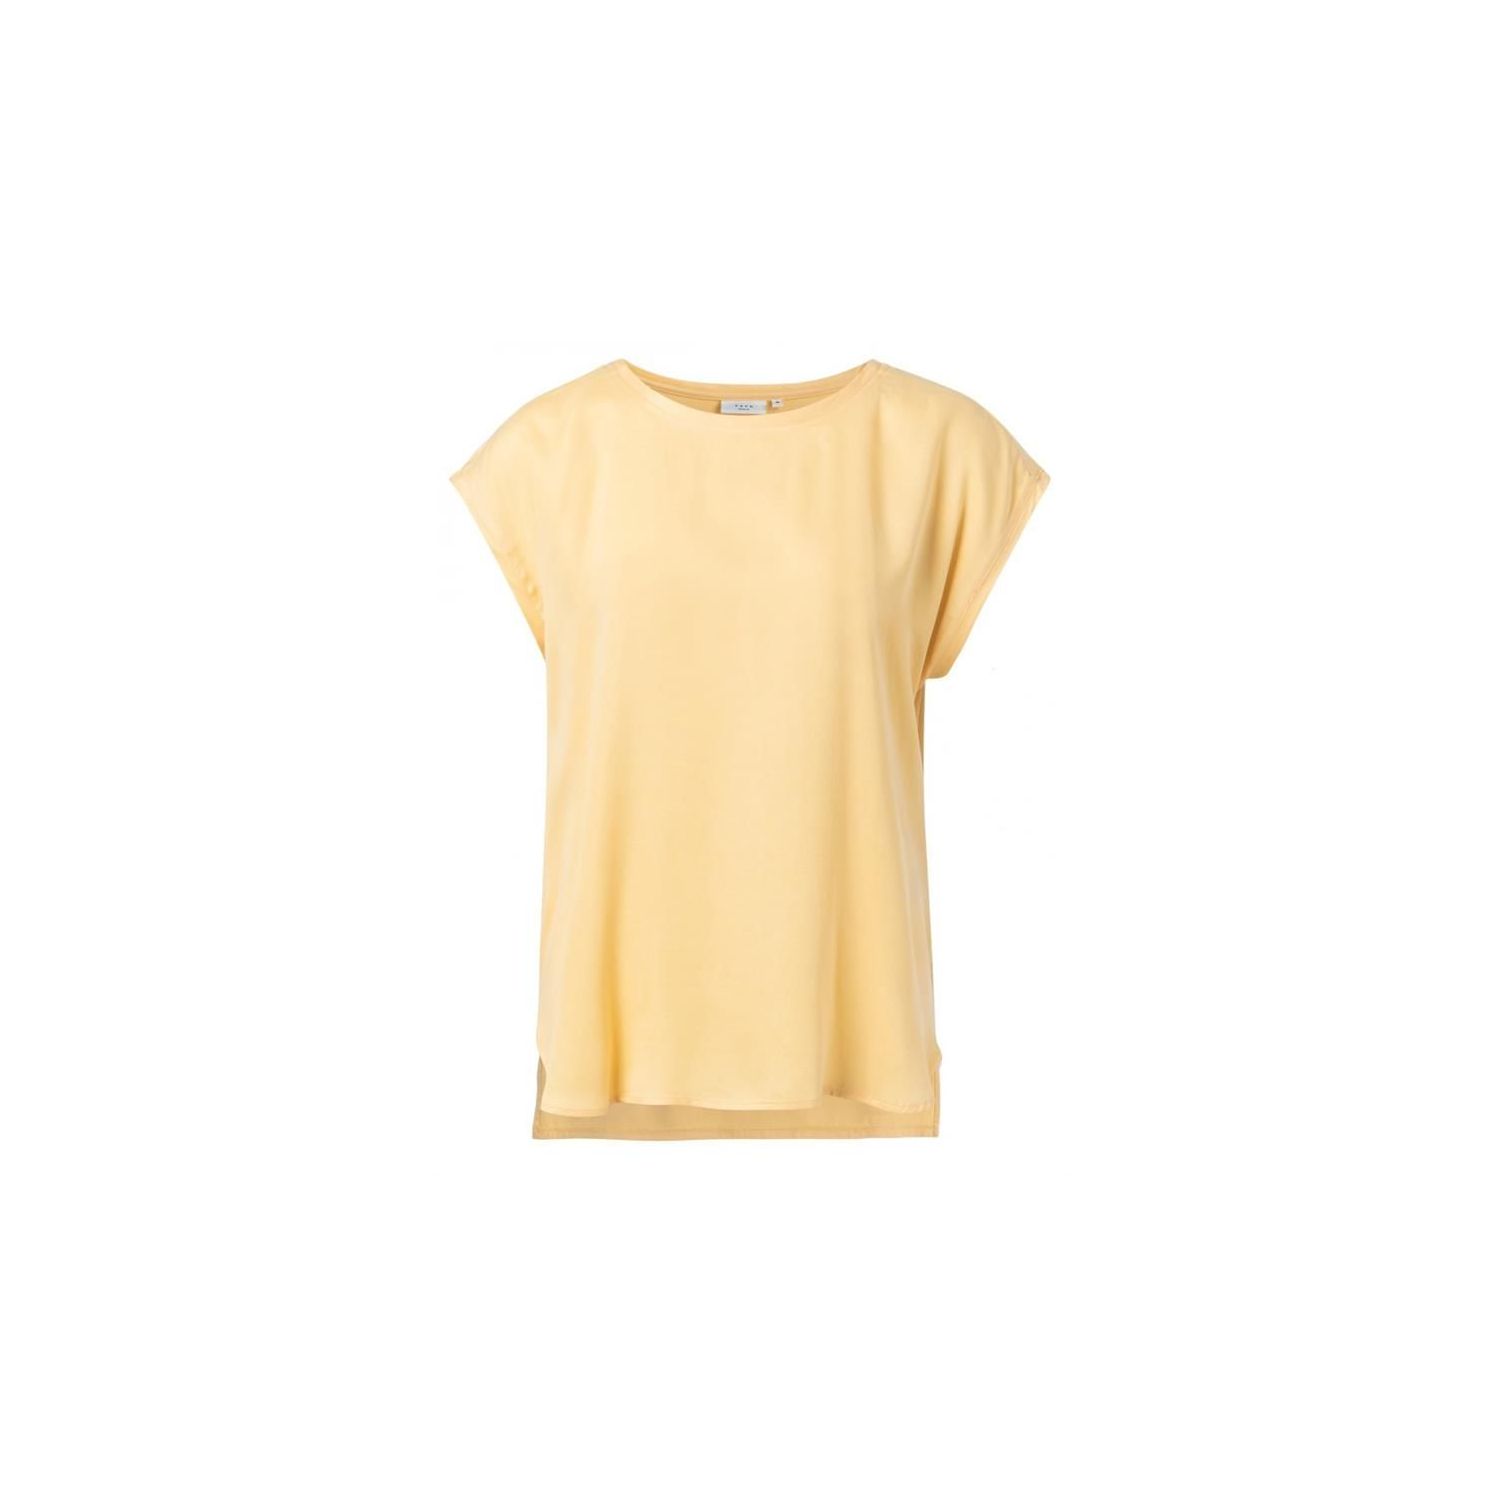 Yaya fabric mix t-shirt rounded hems mellow yellow